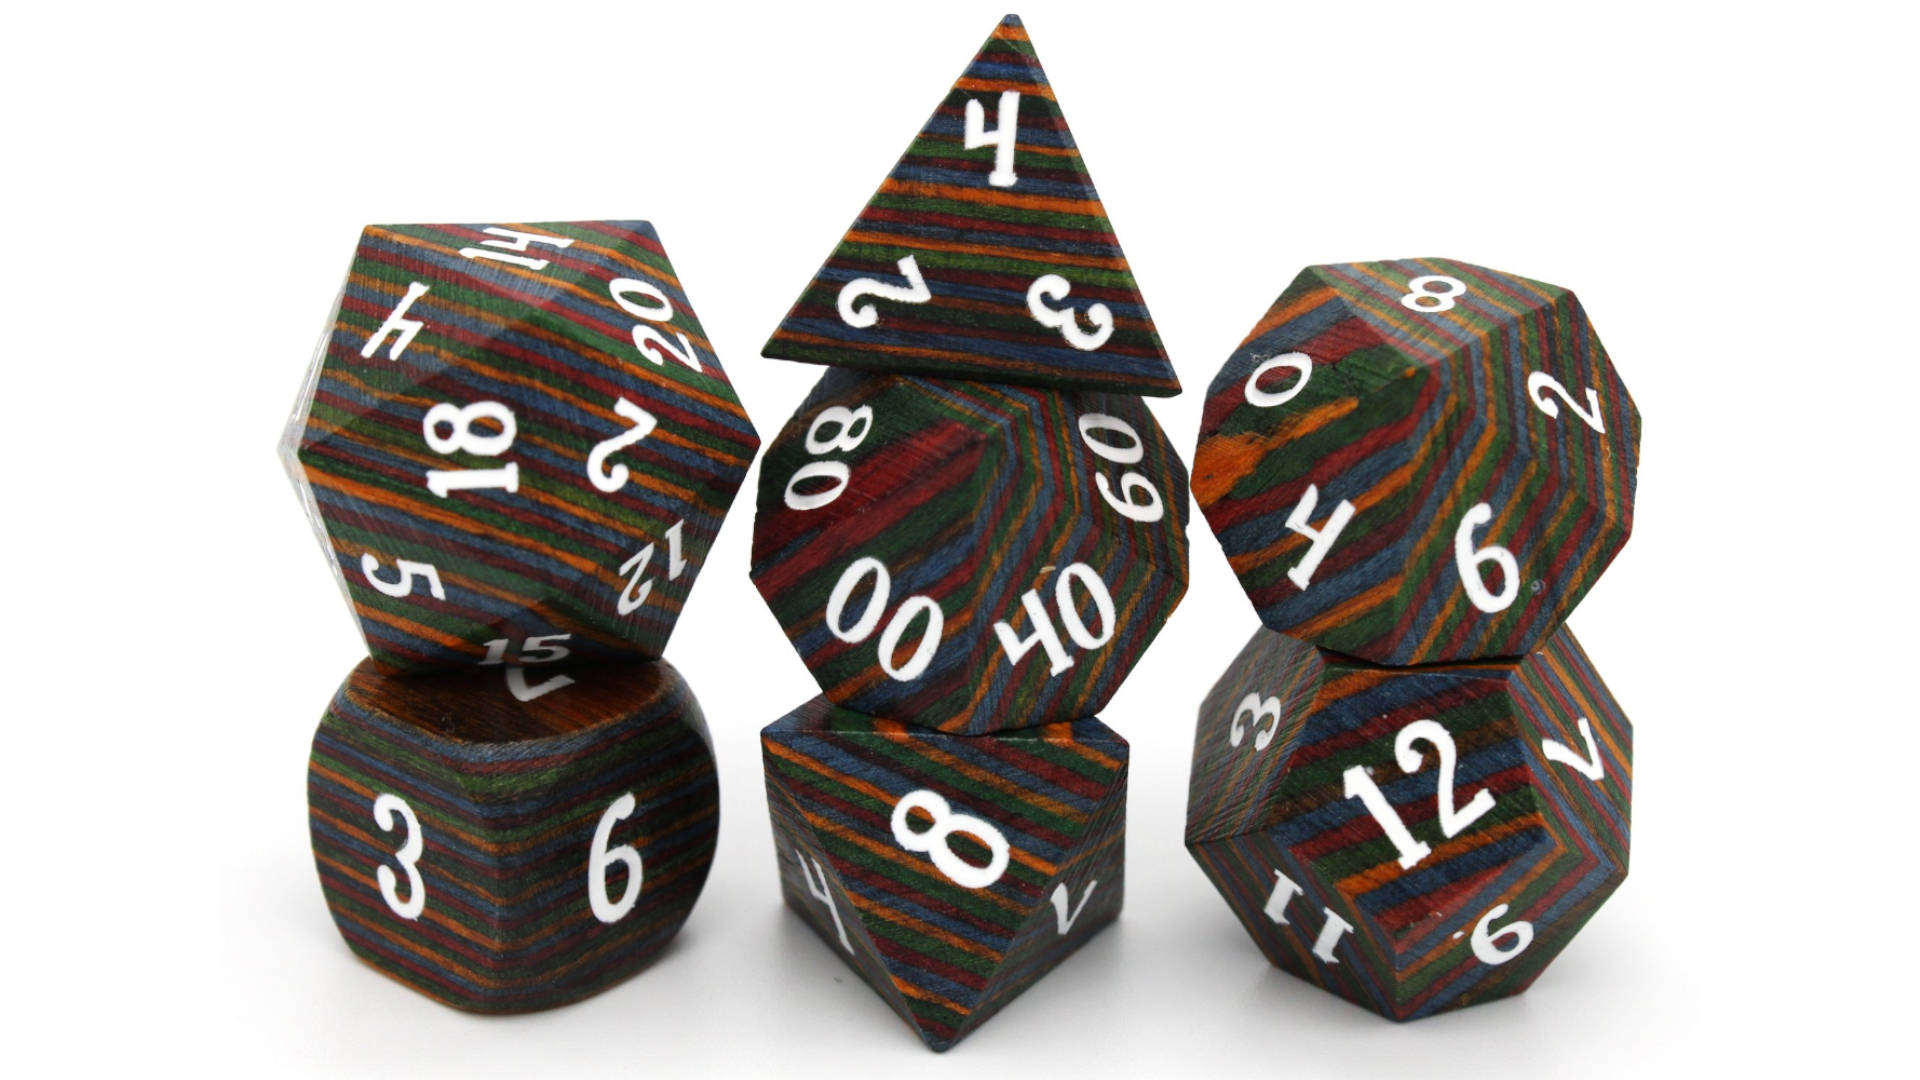 1920x1080 DnD dice: the best D\u0026D dice sets and how to choose them | Wargamer